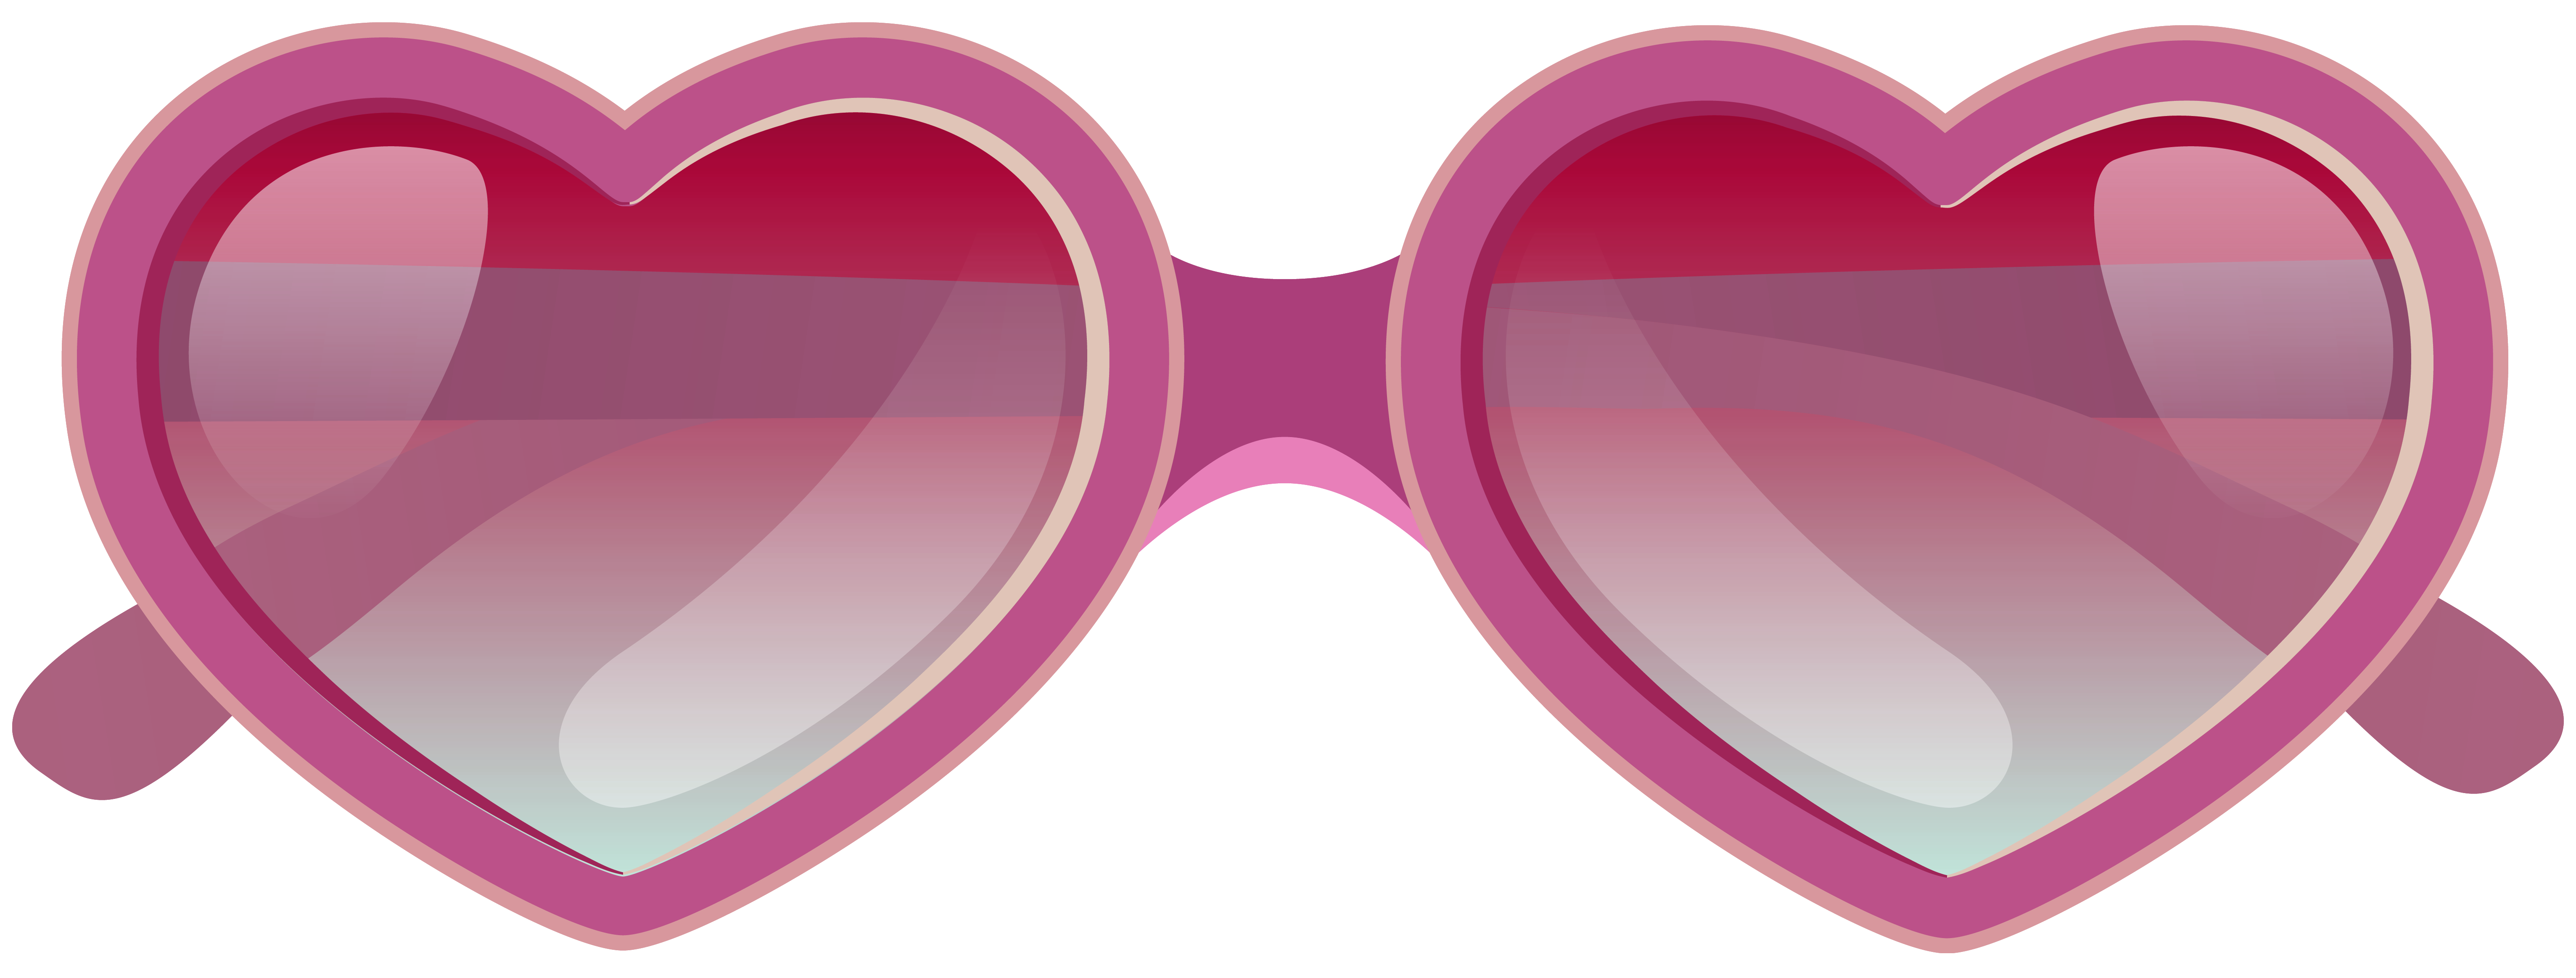 Aviator sunglasses Clip art - Pink Heart Sunglasses PNG Clipart Image